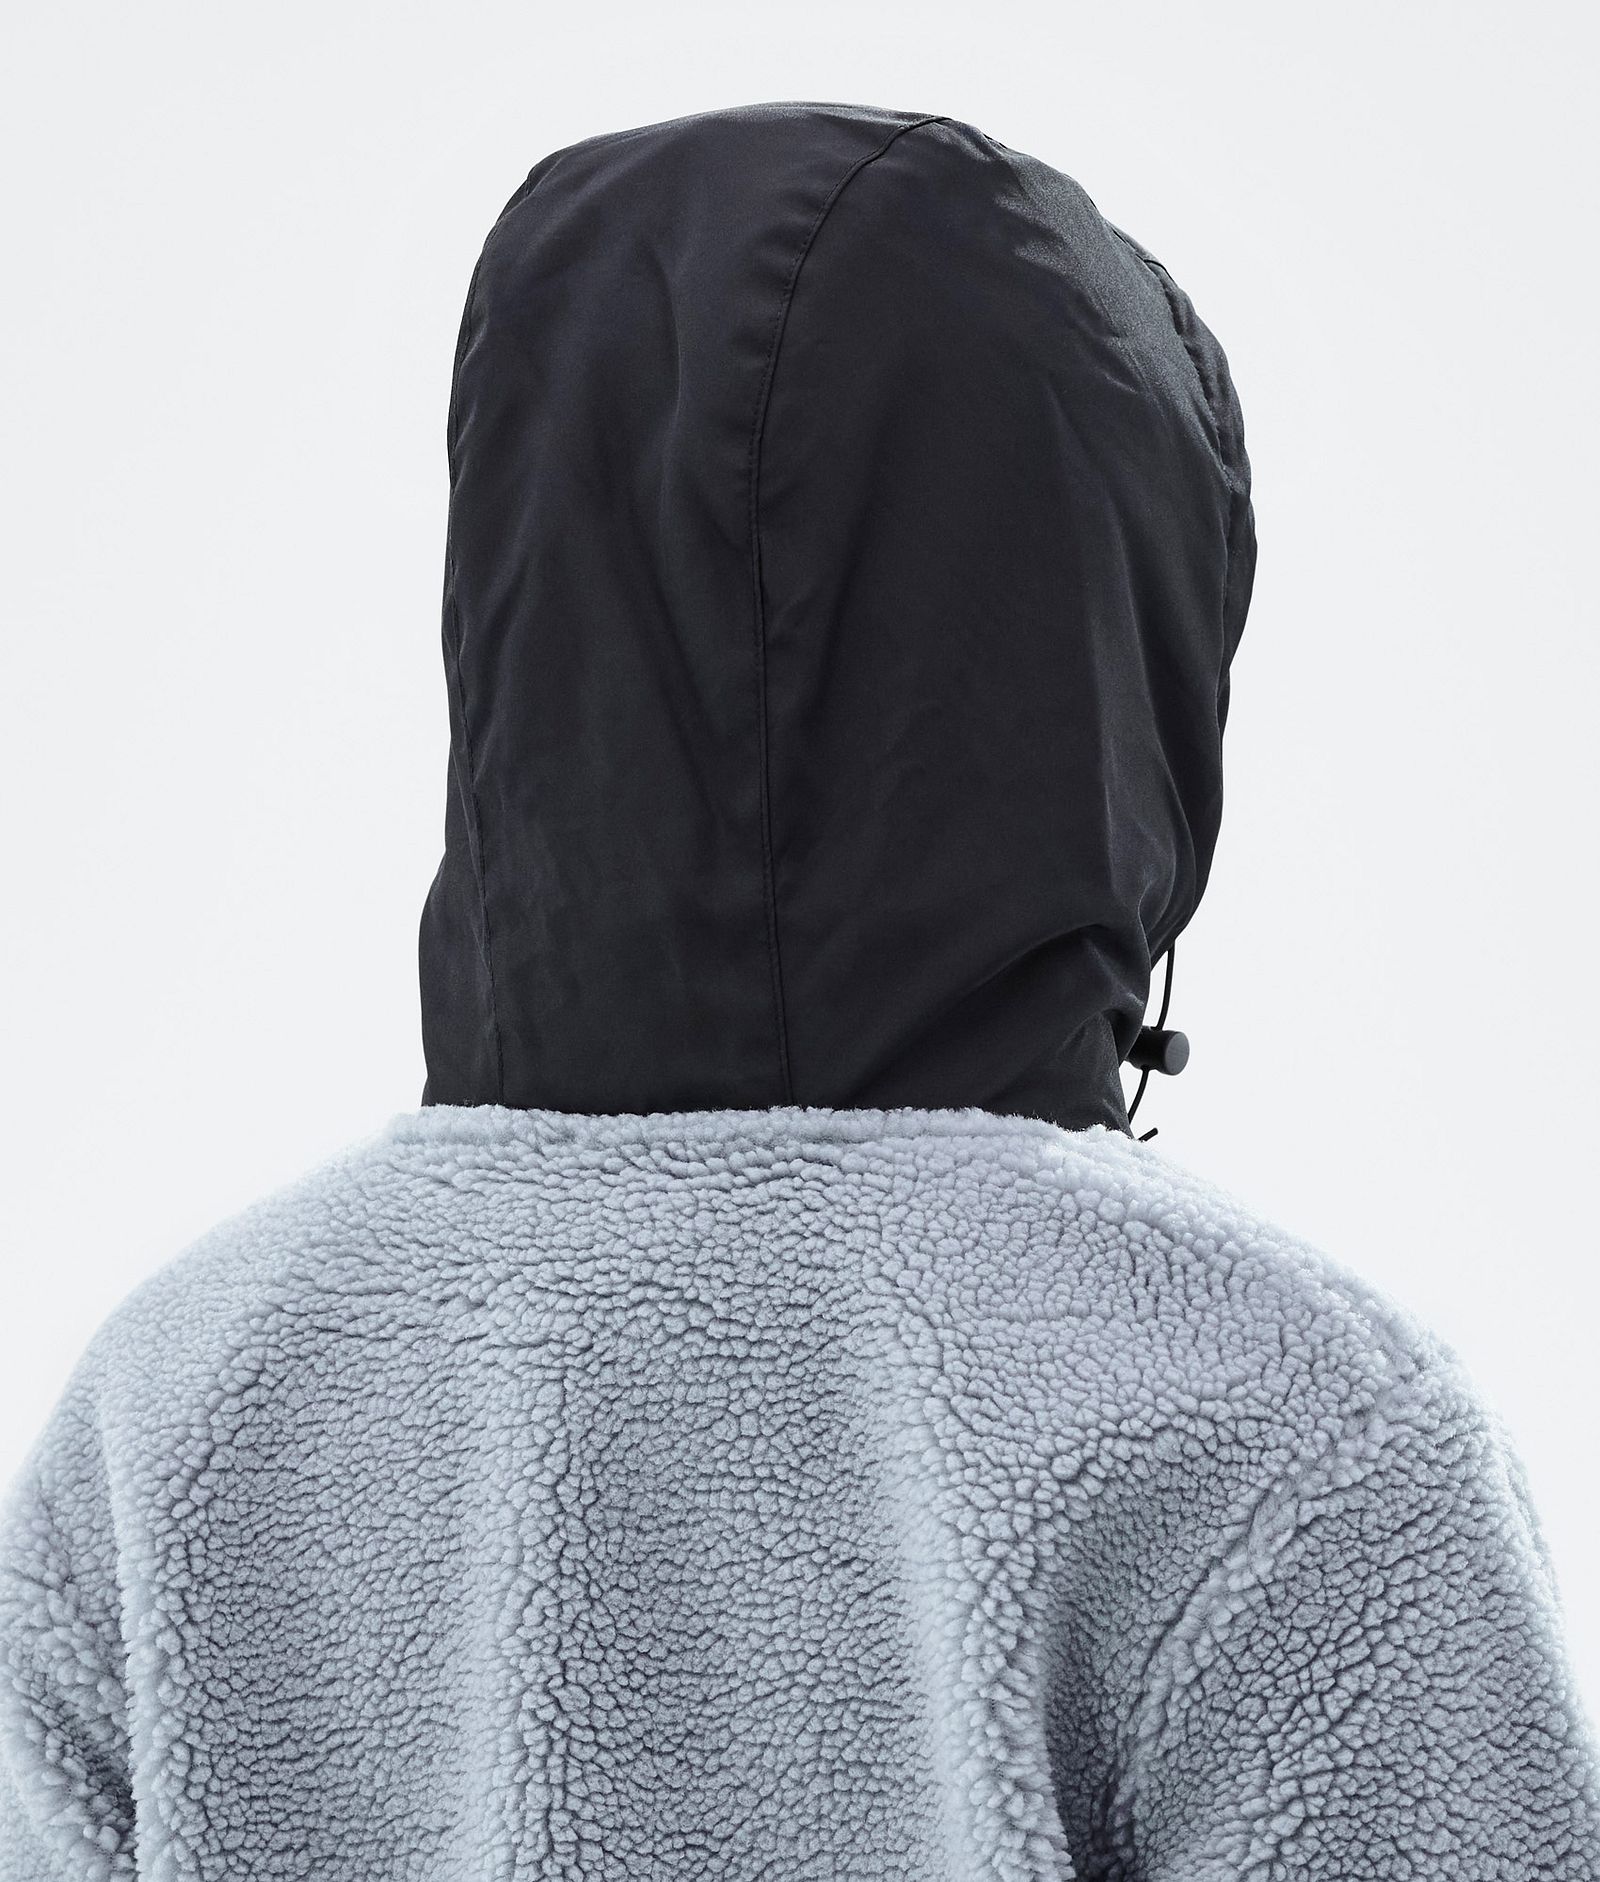 Montec Lima W 2022 Fleece-hoodie Dame Soft Blue/Black